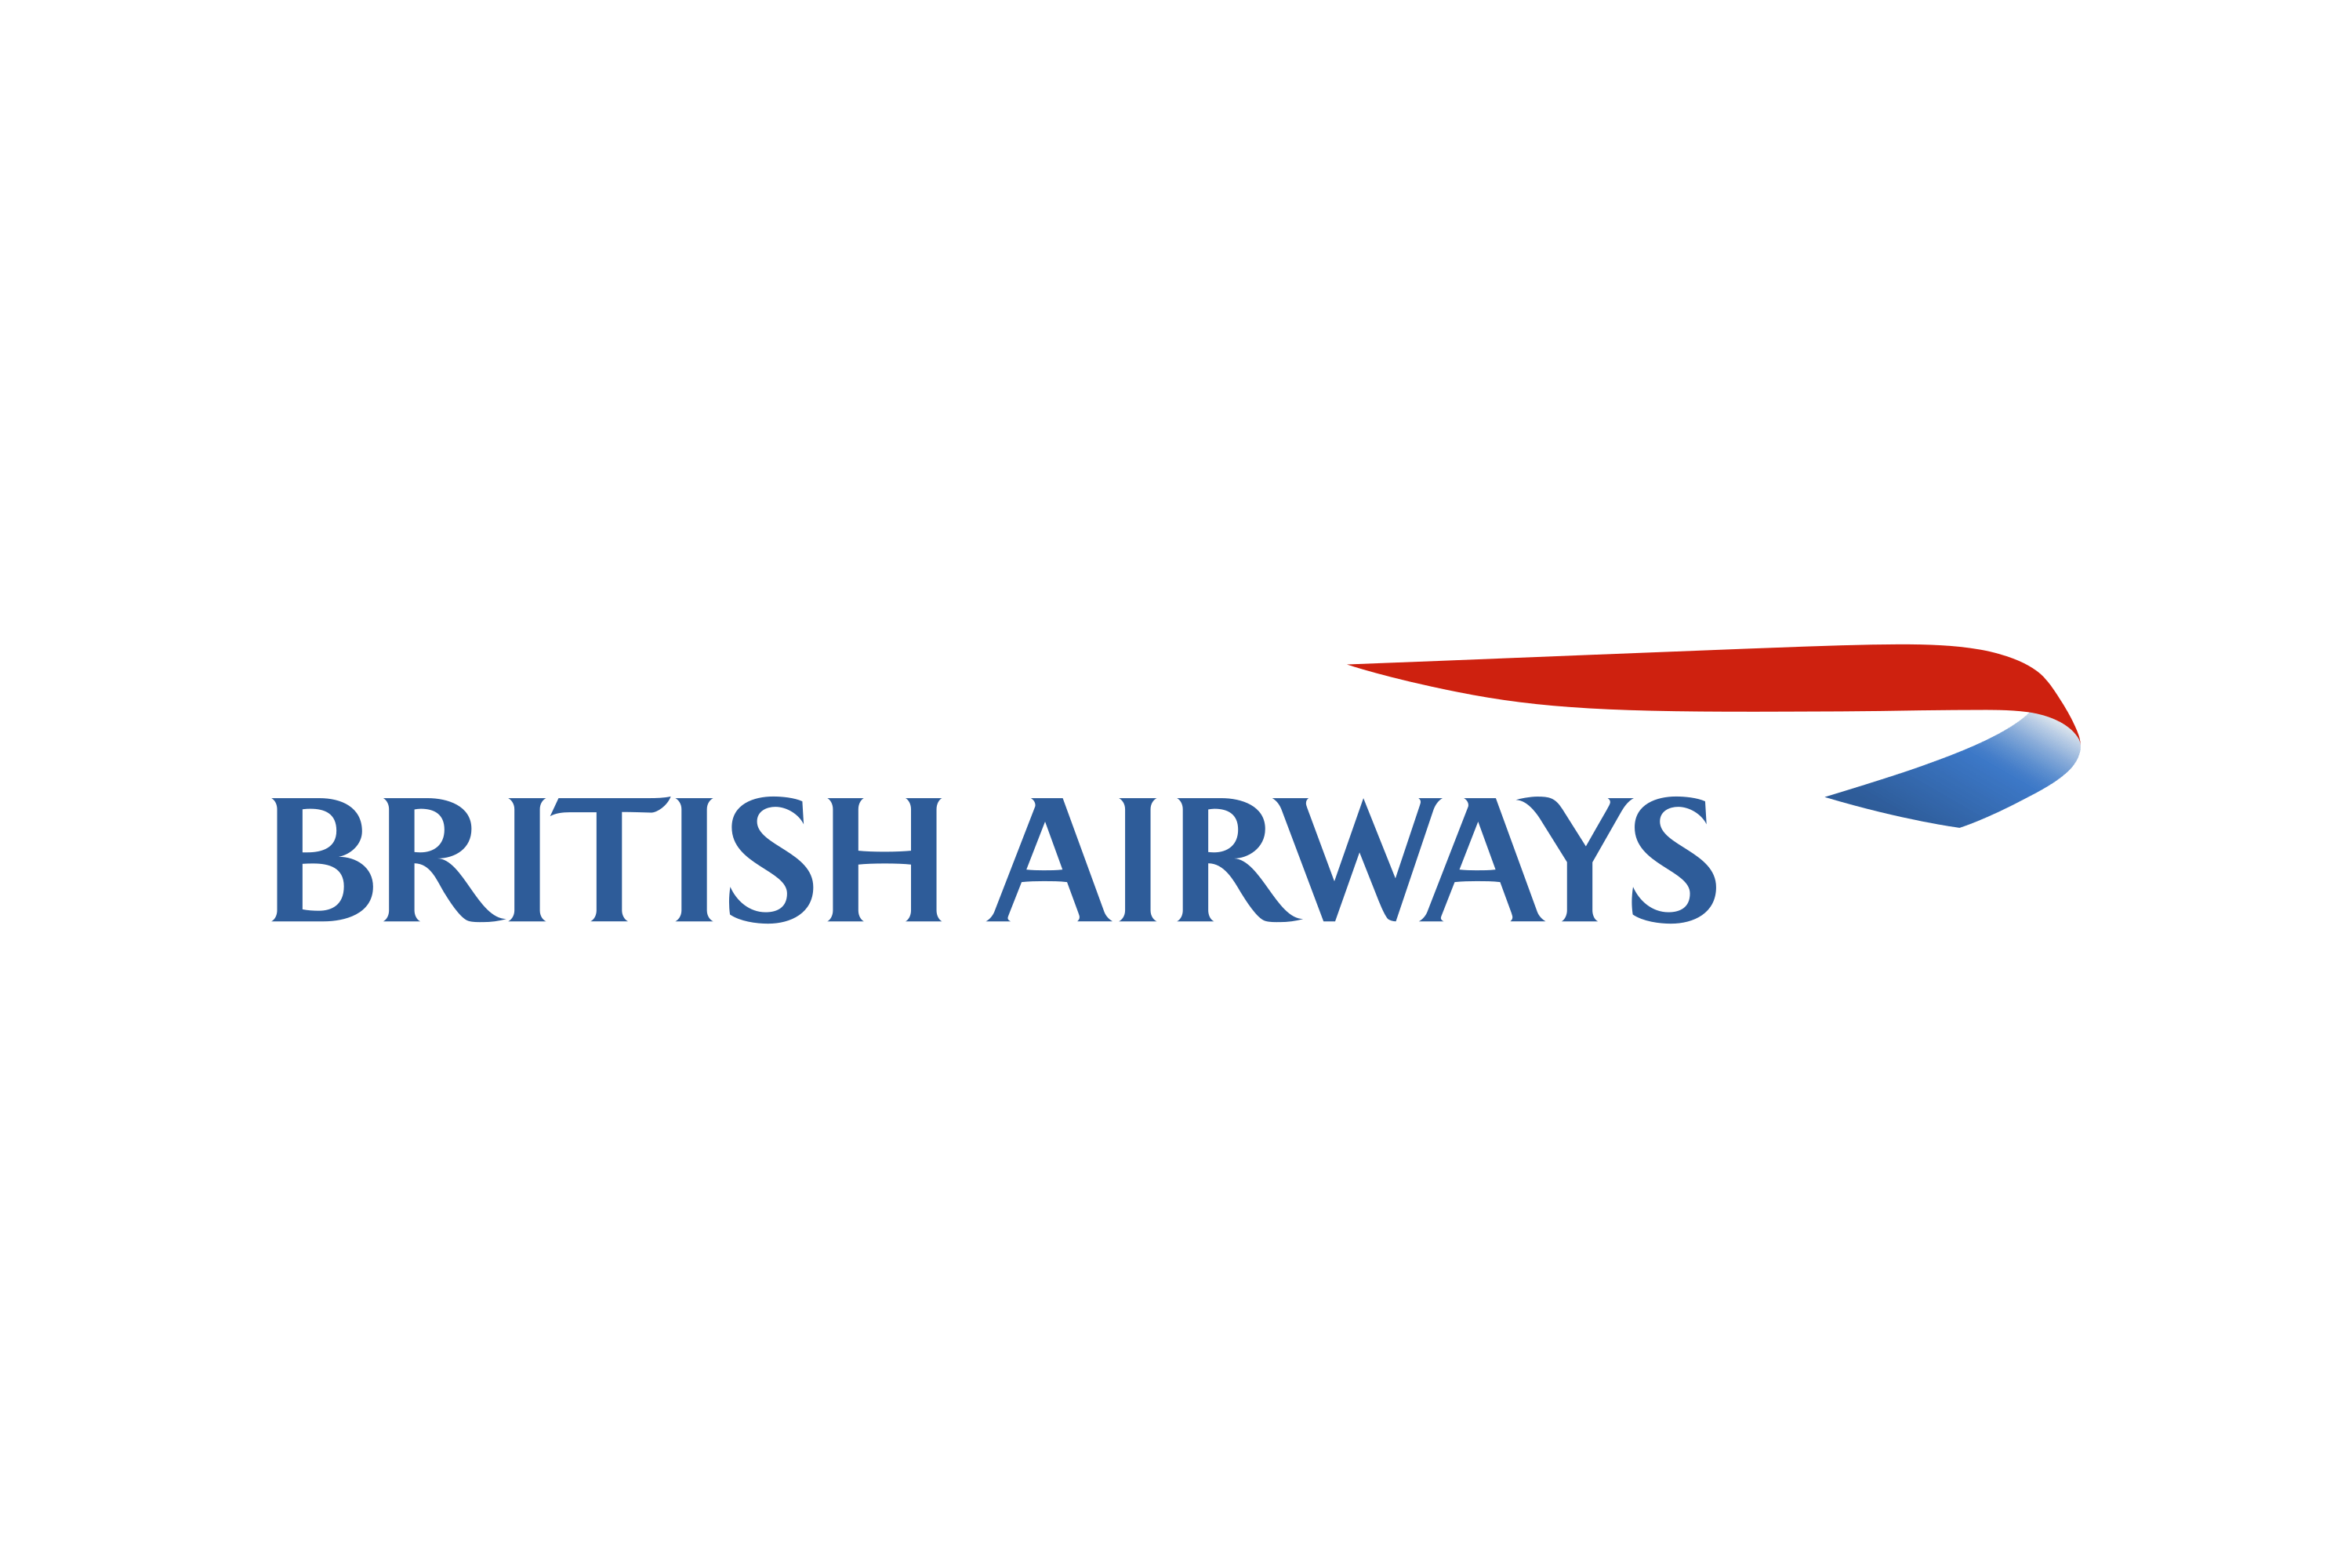 Download British Airways (BA) Logo in SVG Vector or PNG File Format